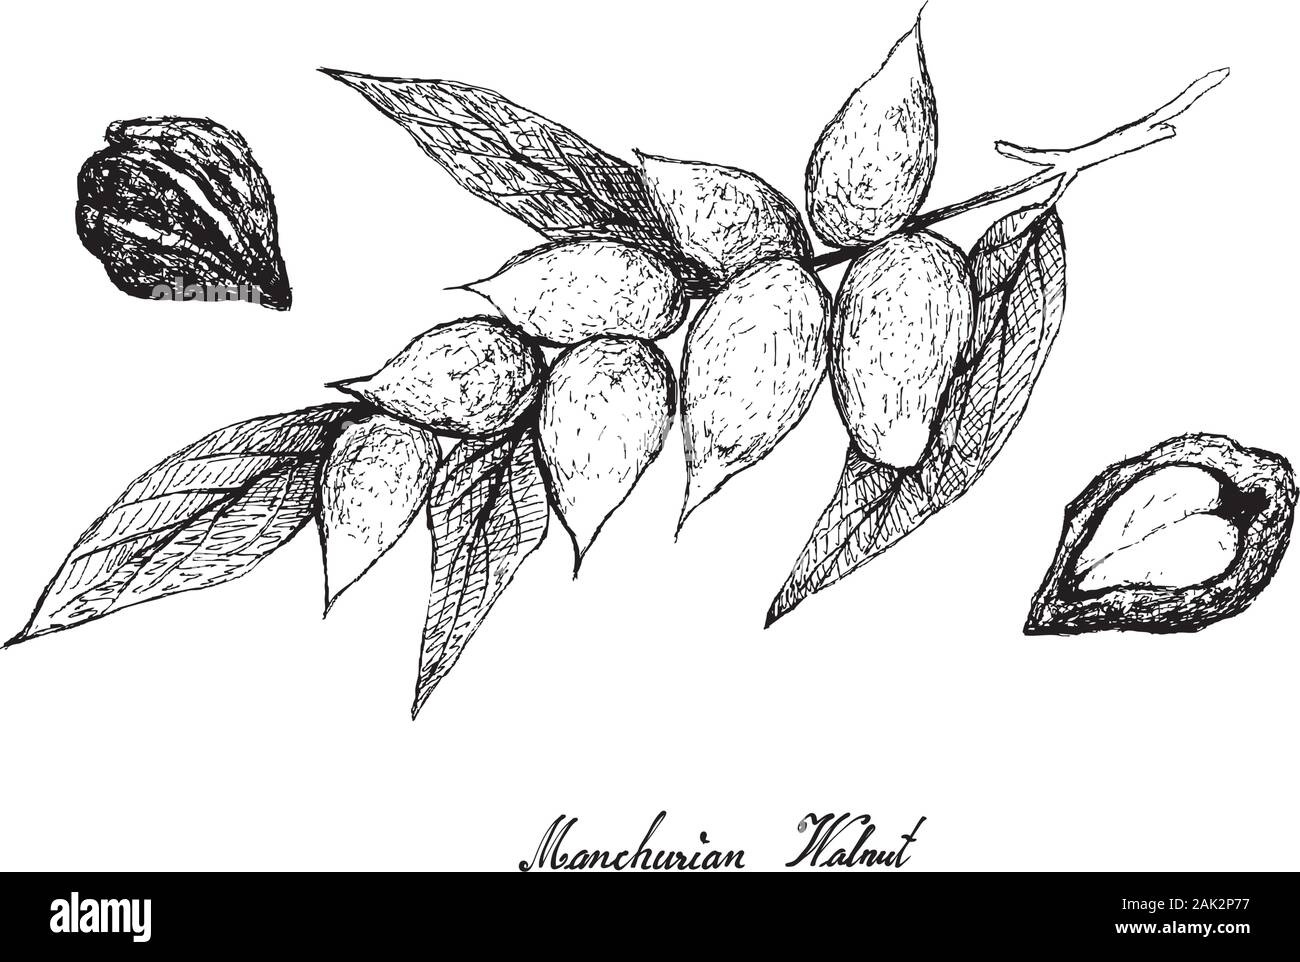 Illustration Hand Drawn Sketch Bunch of Juglans Mandshurica or Manchurian Walnut Fruits on A Tree Branch. Stock Vector